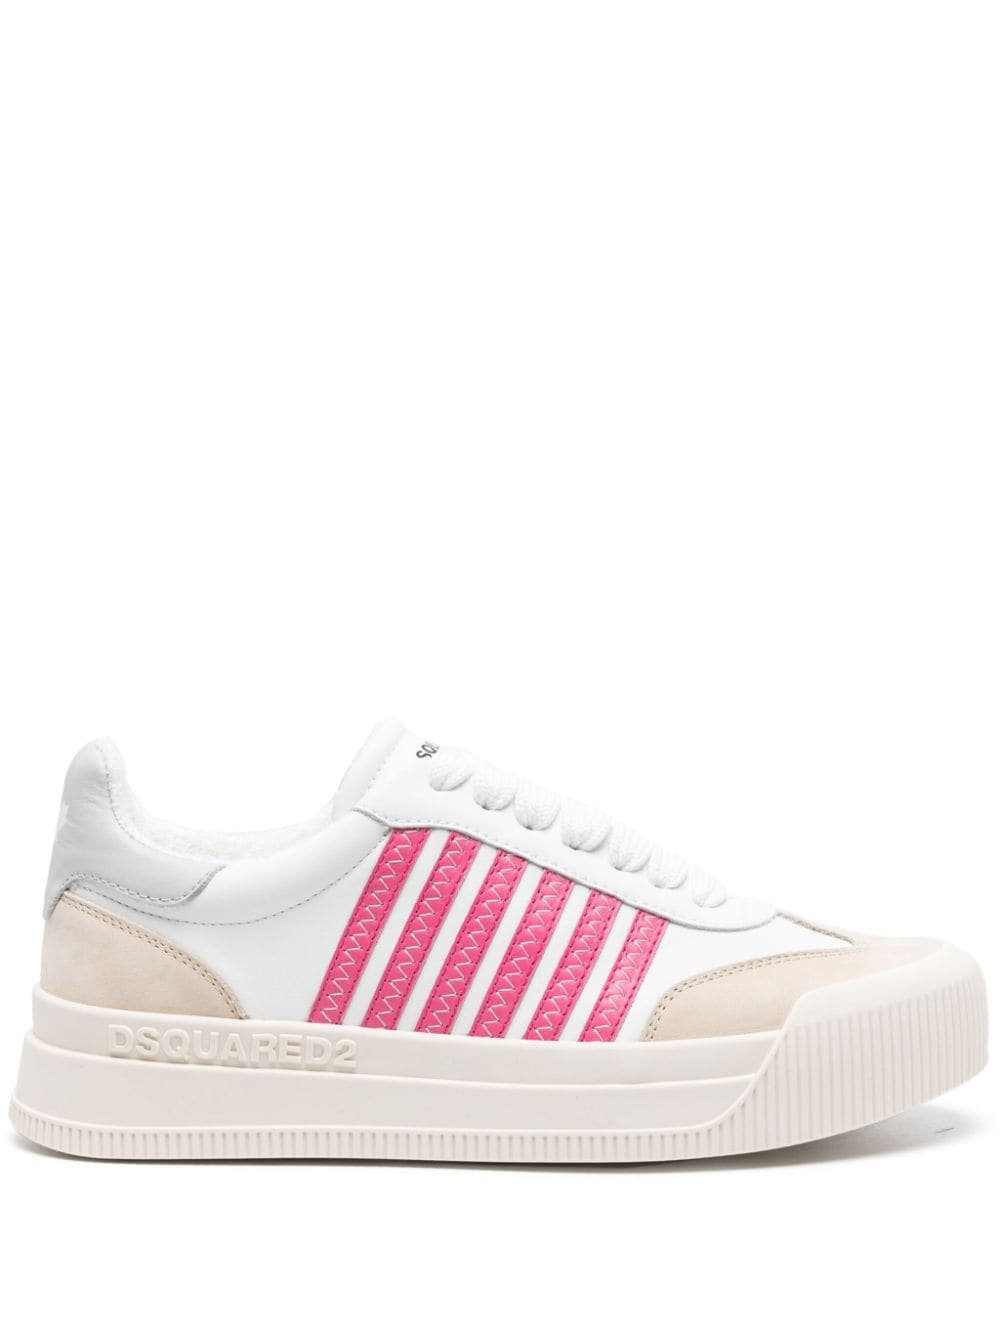 Dsquared2 striped lace-up sneakers - White von Dsquared2